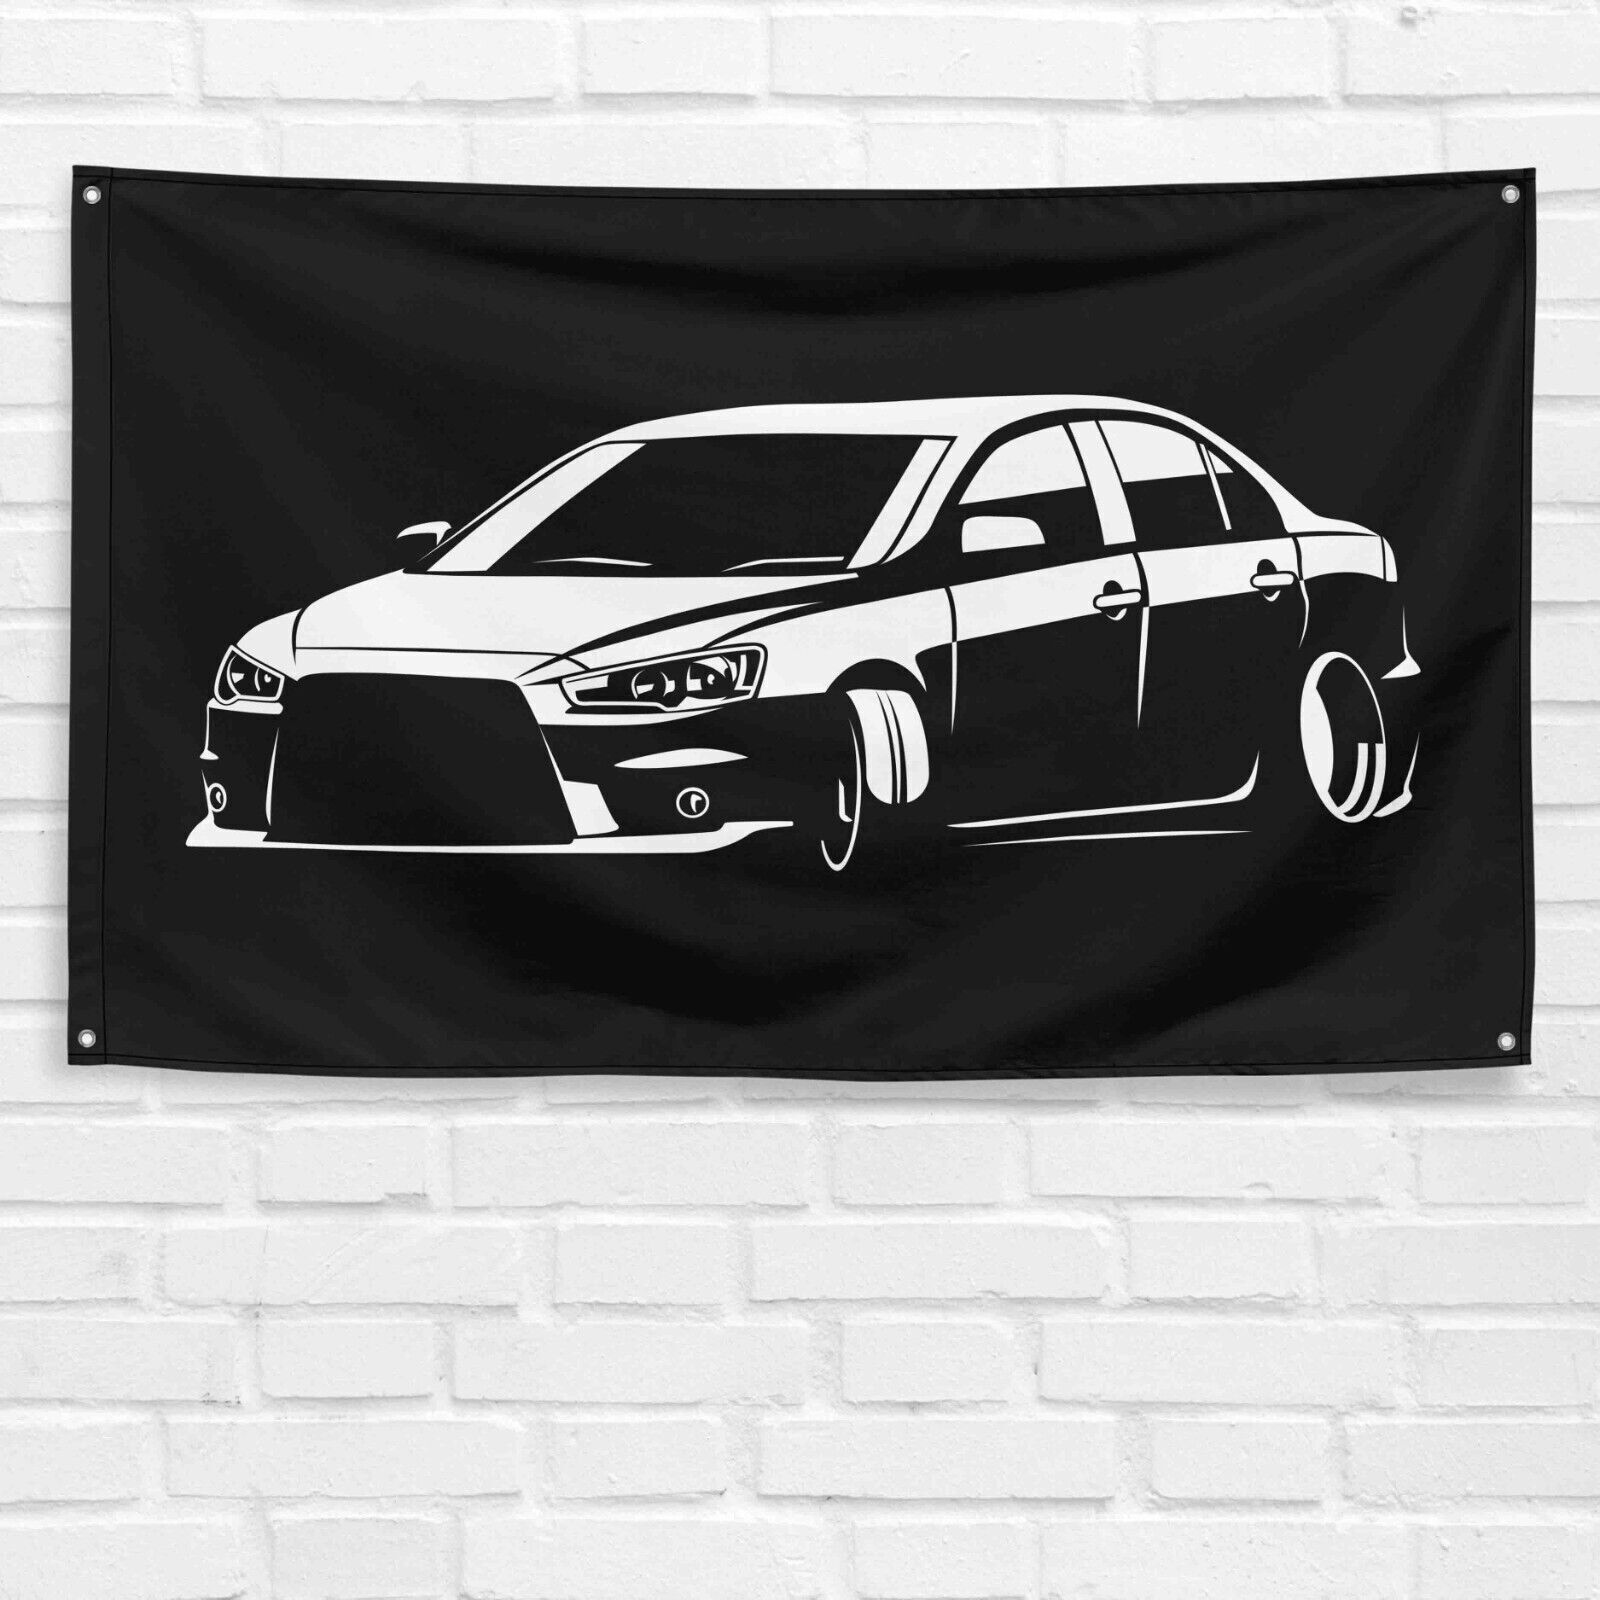 For Mitsubishi Lancer Evolution 2010 Enthusiast 3x5 ft Flag Dad Gift Banner